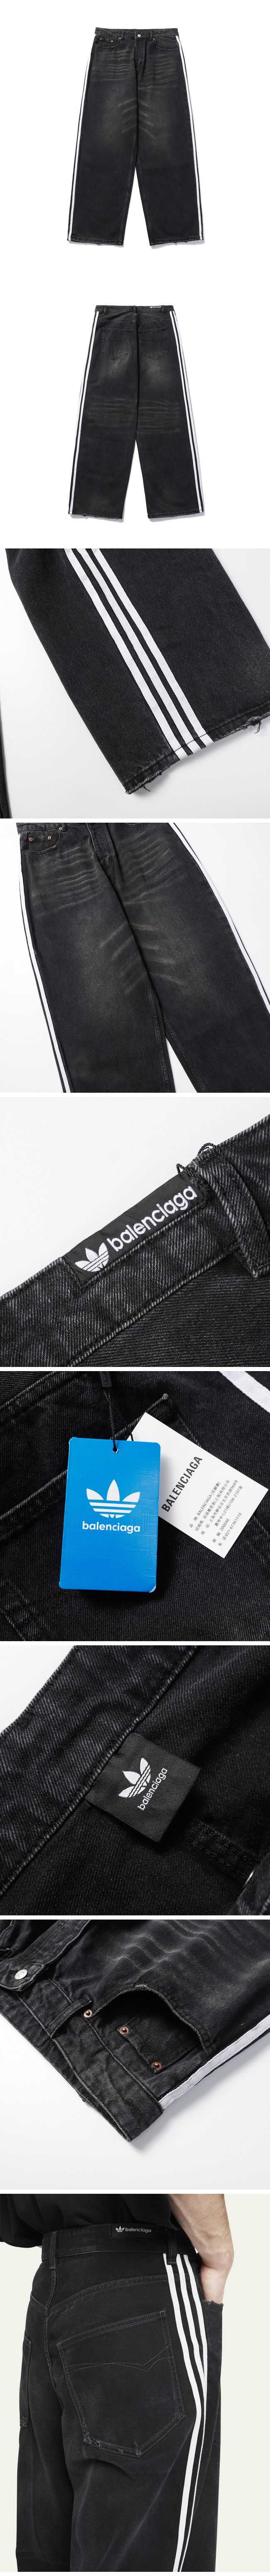 Balenciaga x adidas Large Baggy Pants Black バレンシアガ x アディダス ラージ バギー パンツ ブラック